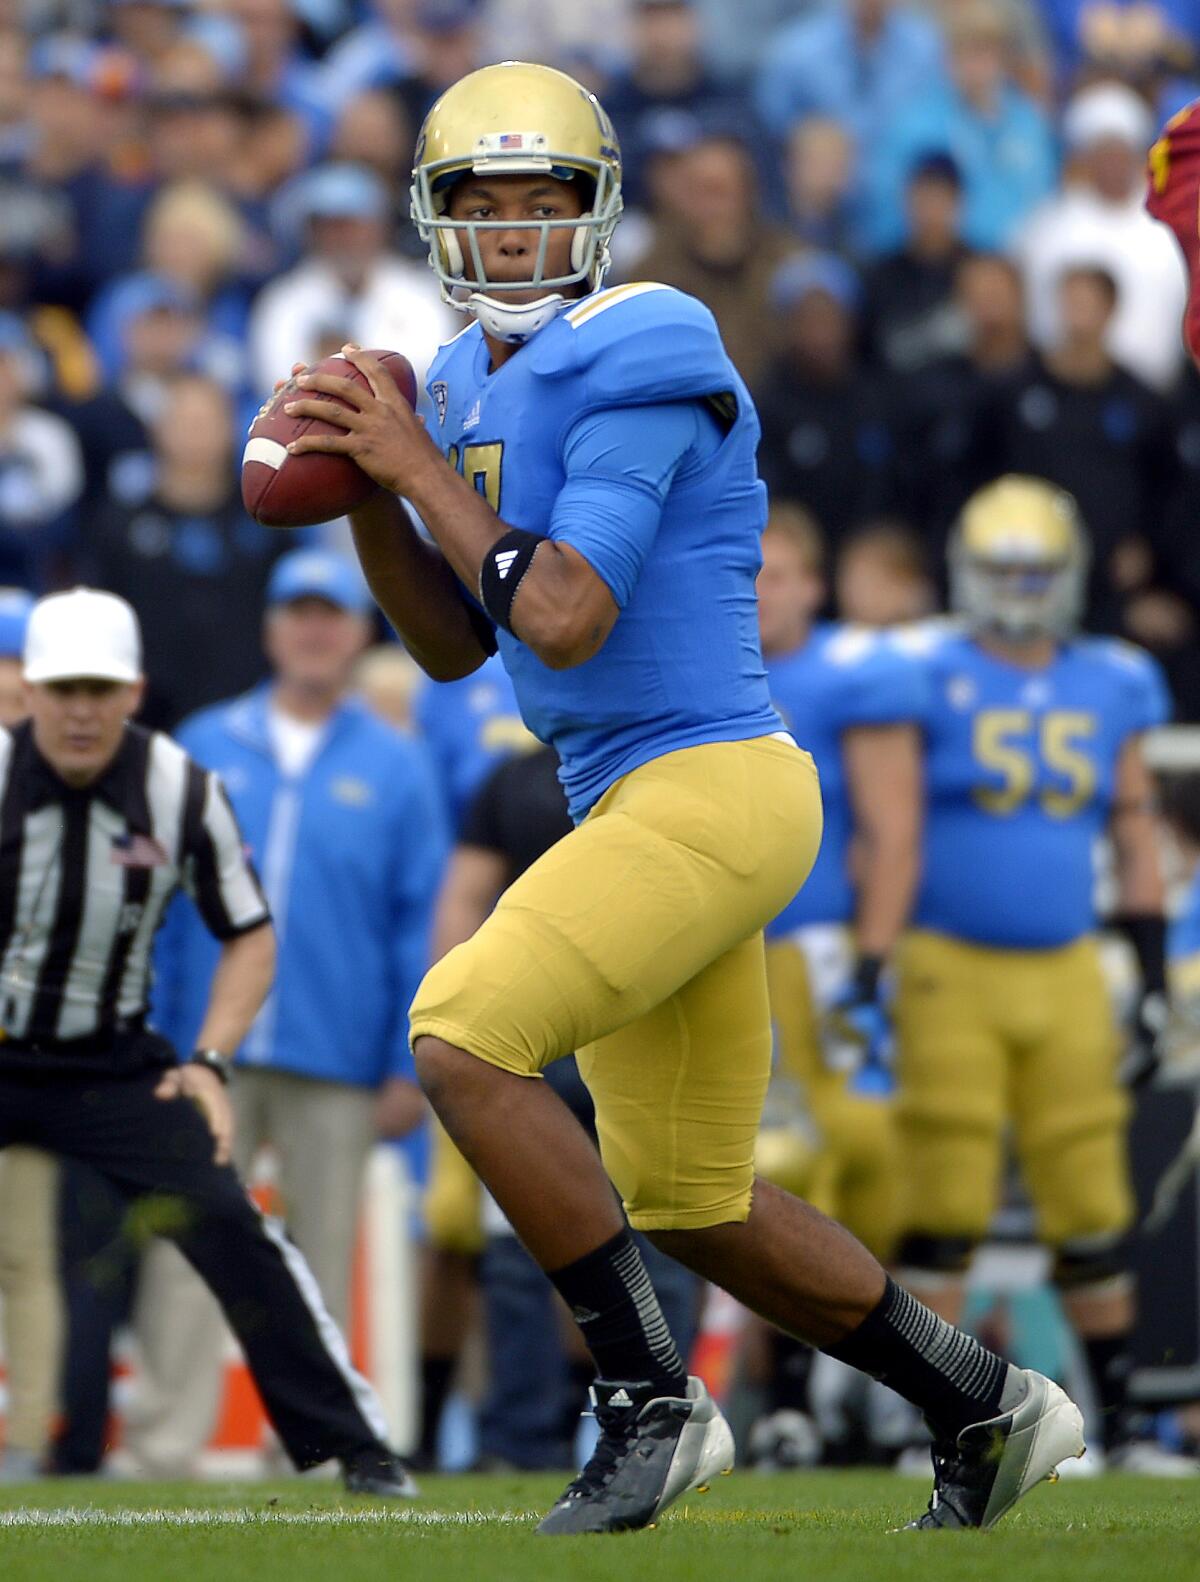 UCLA quarterback Brett Hundley gets set to pass